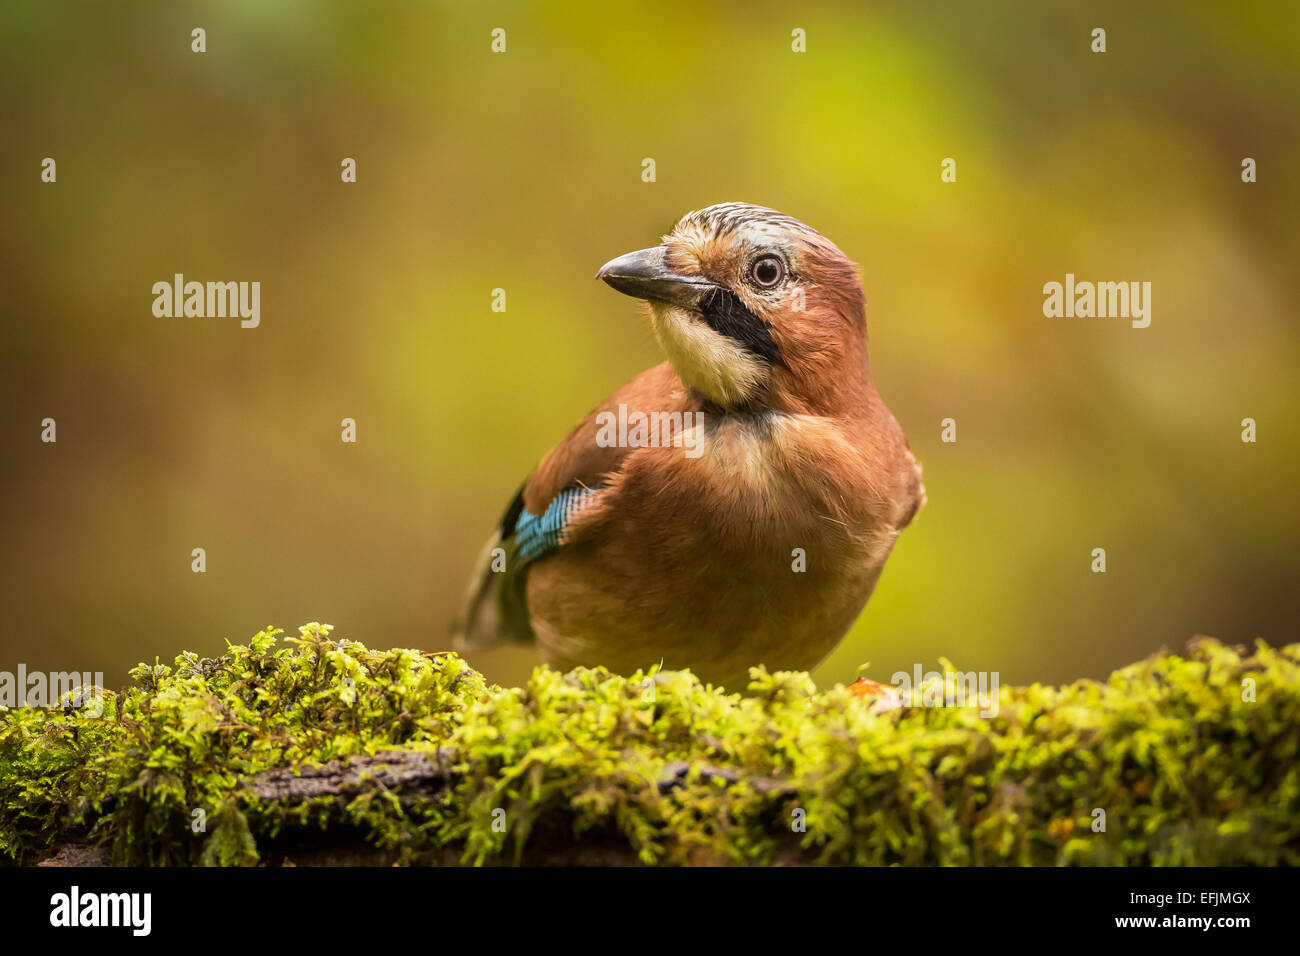 Jay (Garrulus glandarius), a shy woodland bird, photographed on a fallen mossy tree trunk. Stock Photo